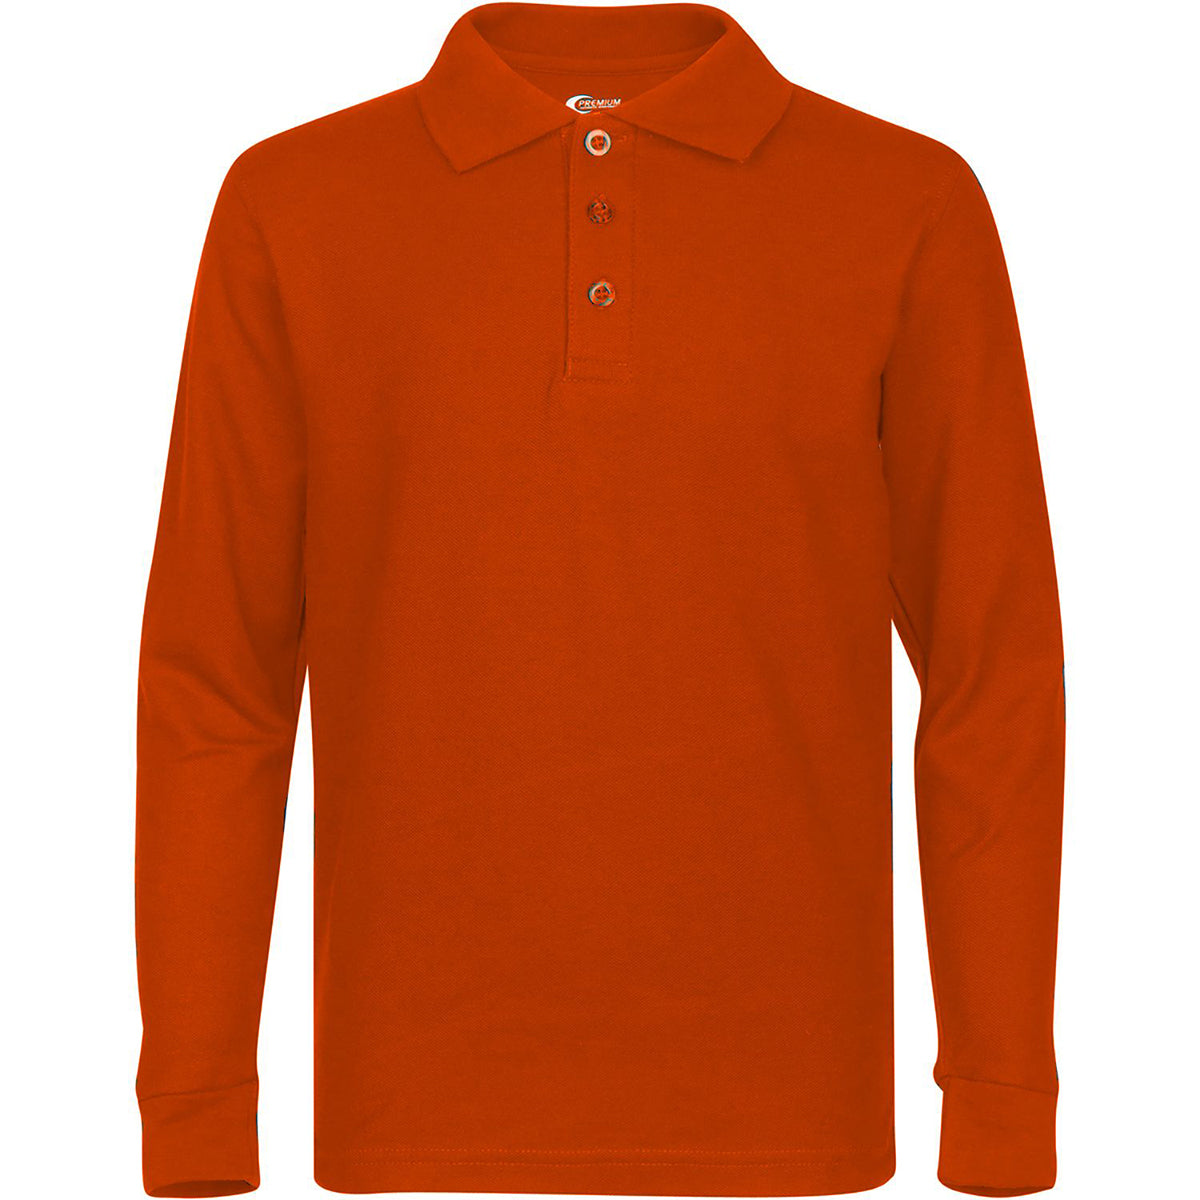 Toddlers Long Sleeve Pique Polo Shirt - Orange